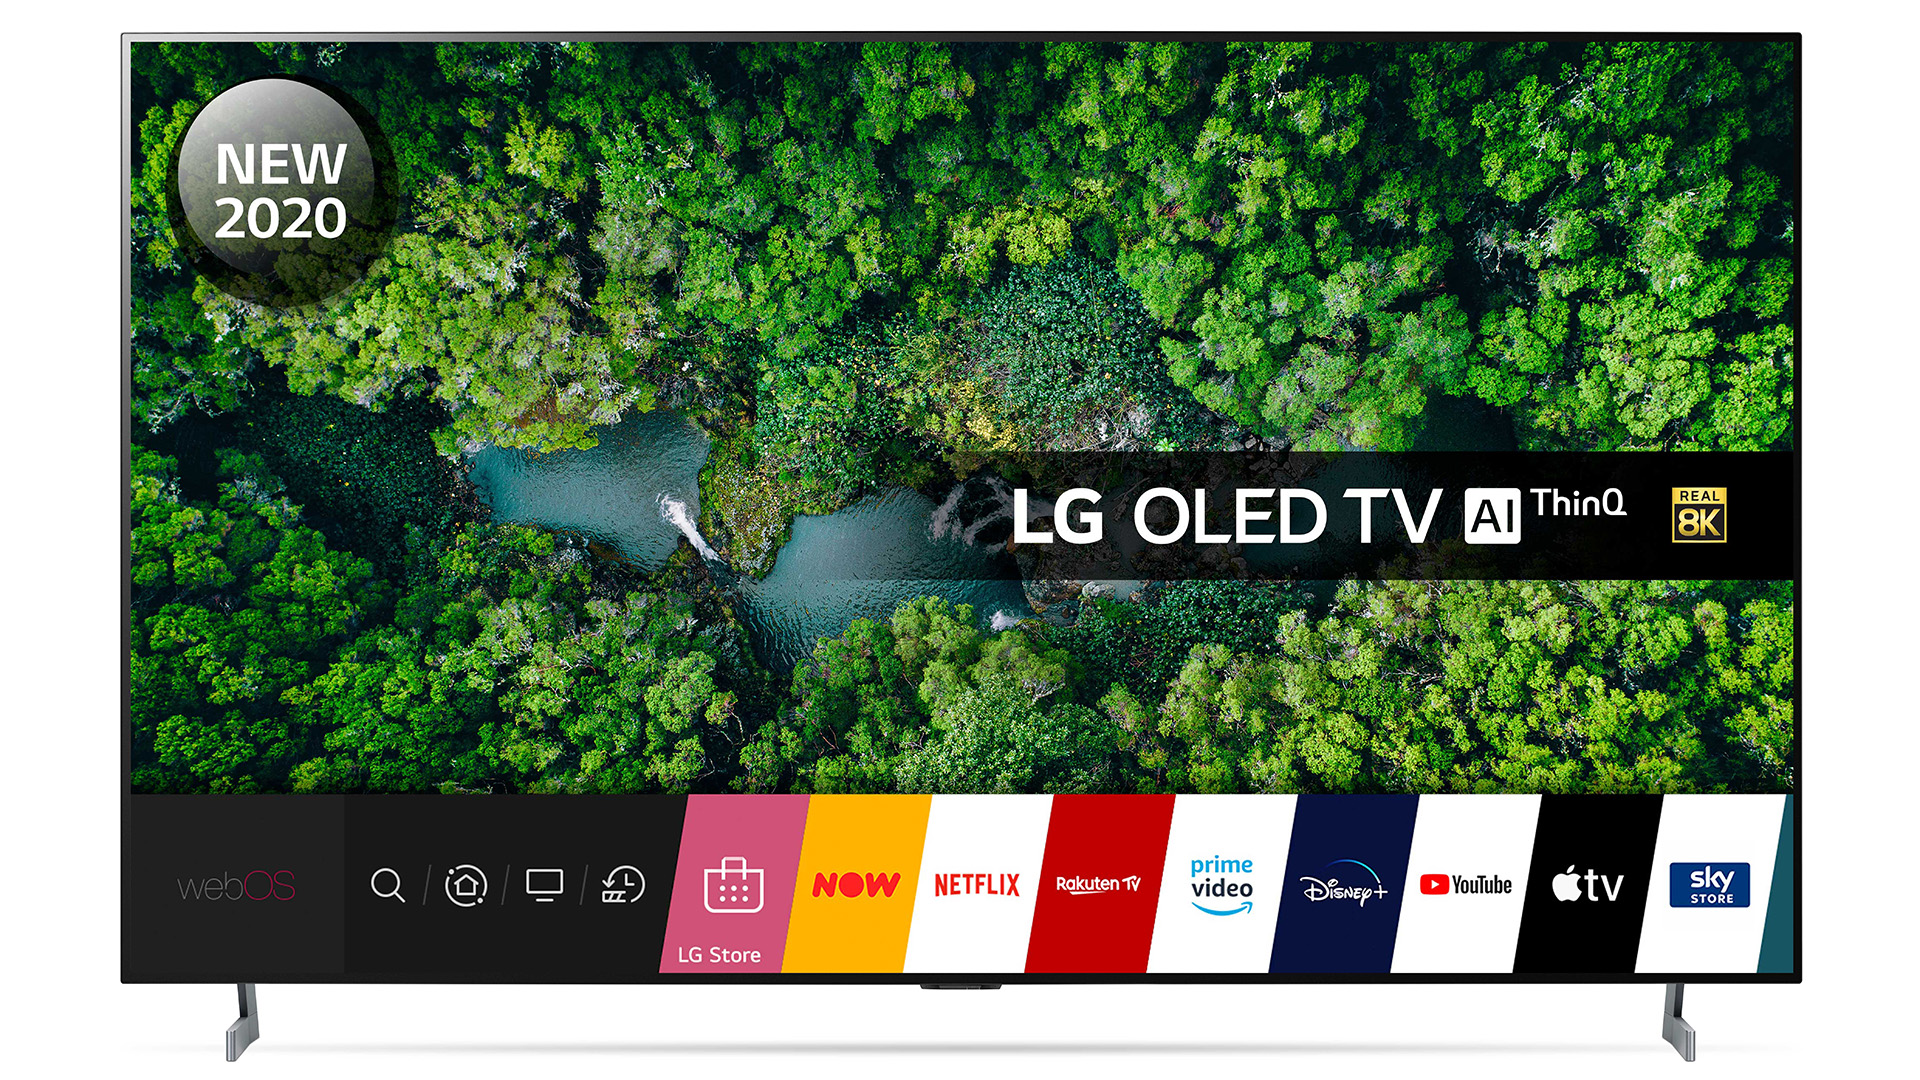 LG 2020 TV lineup: LG OLED 4K, 8K